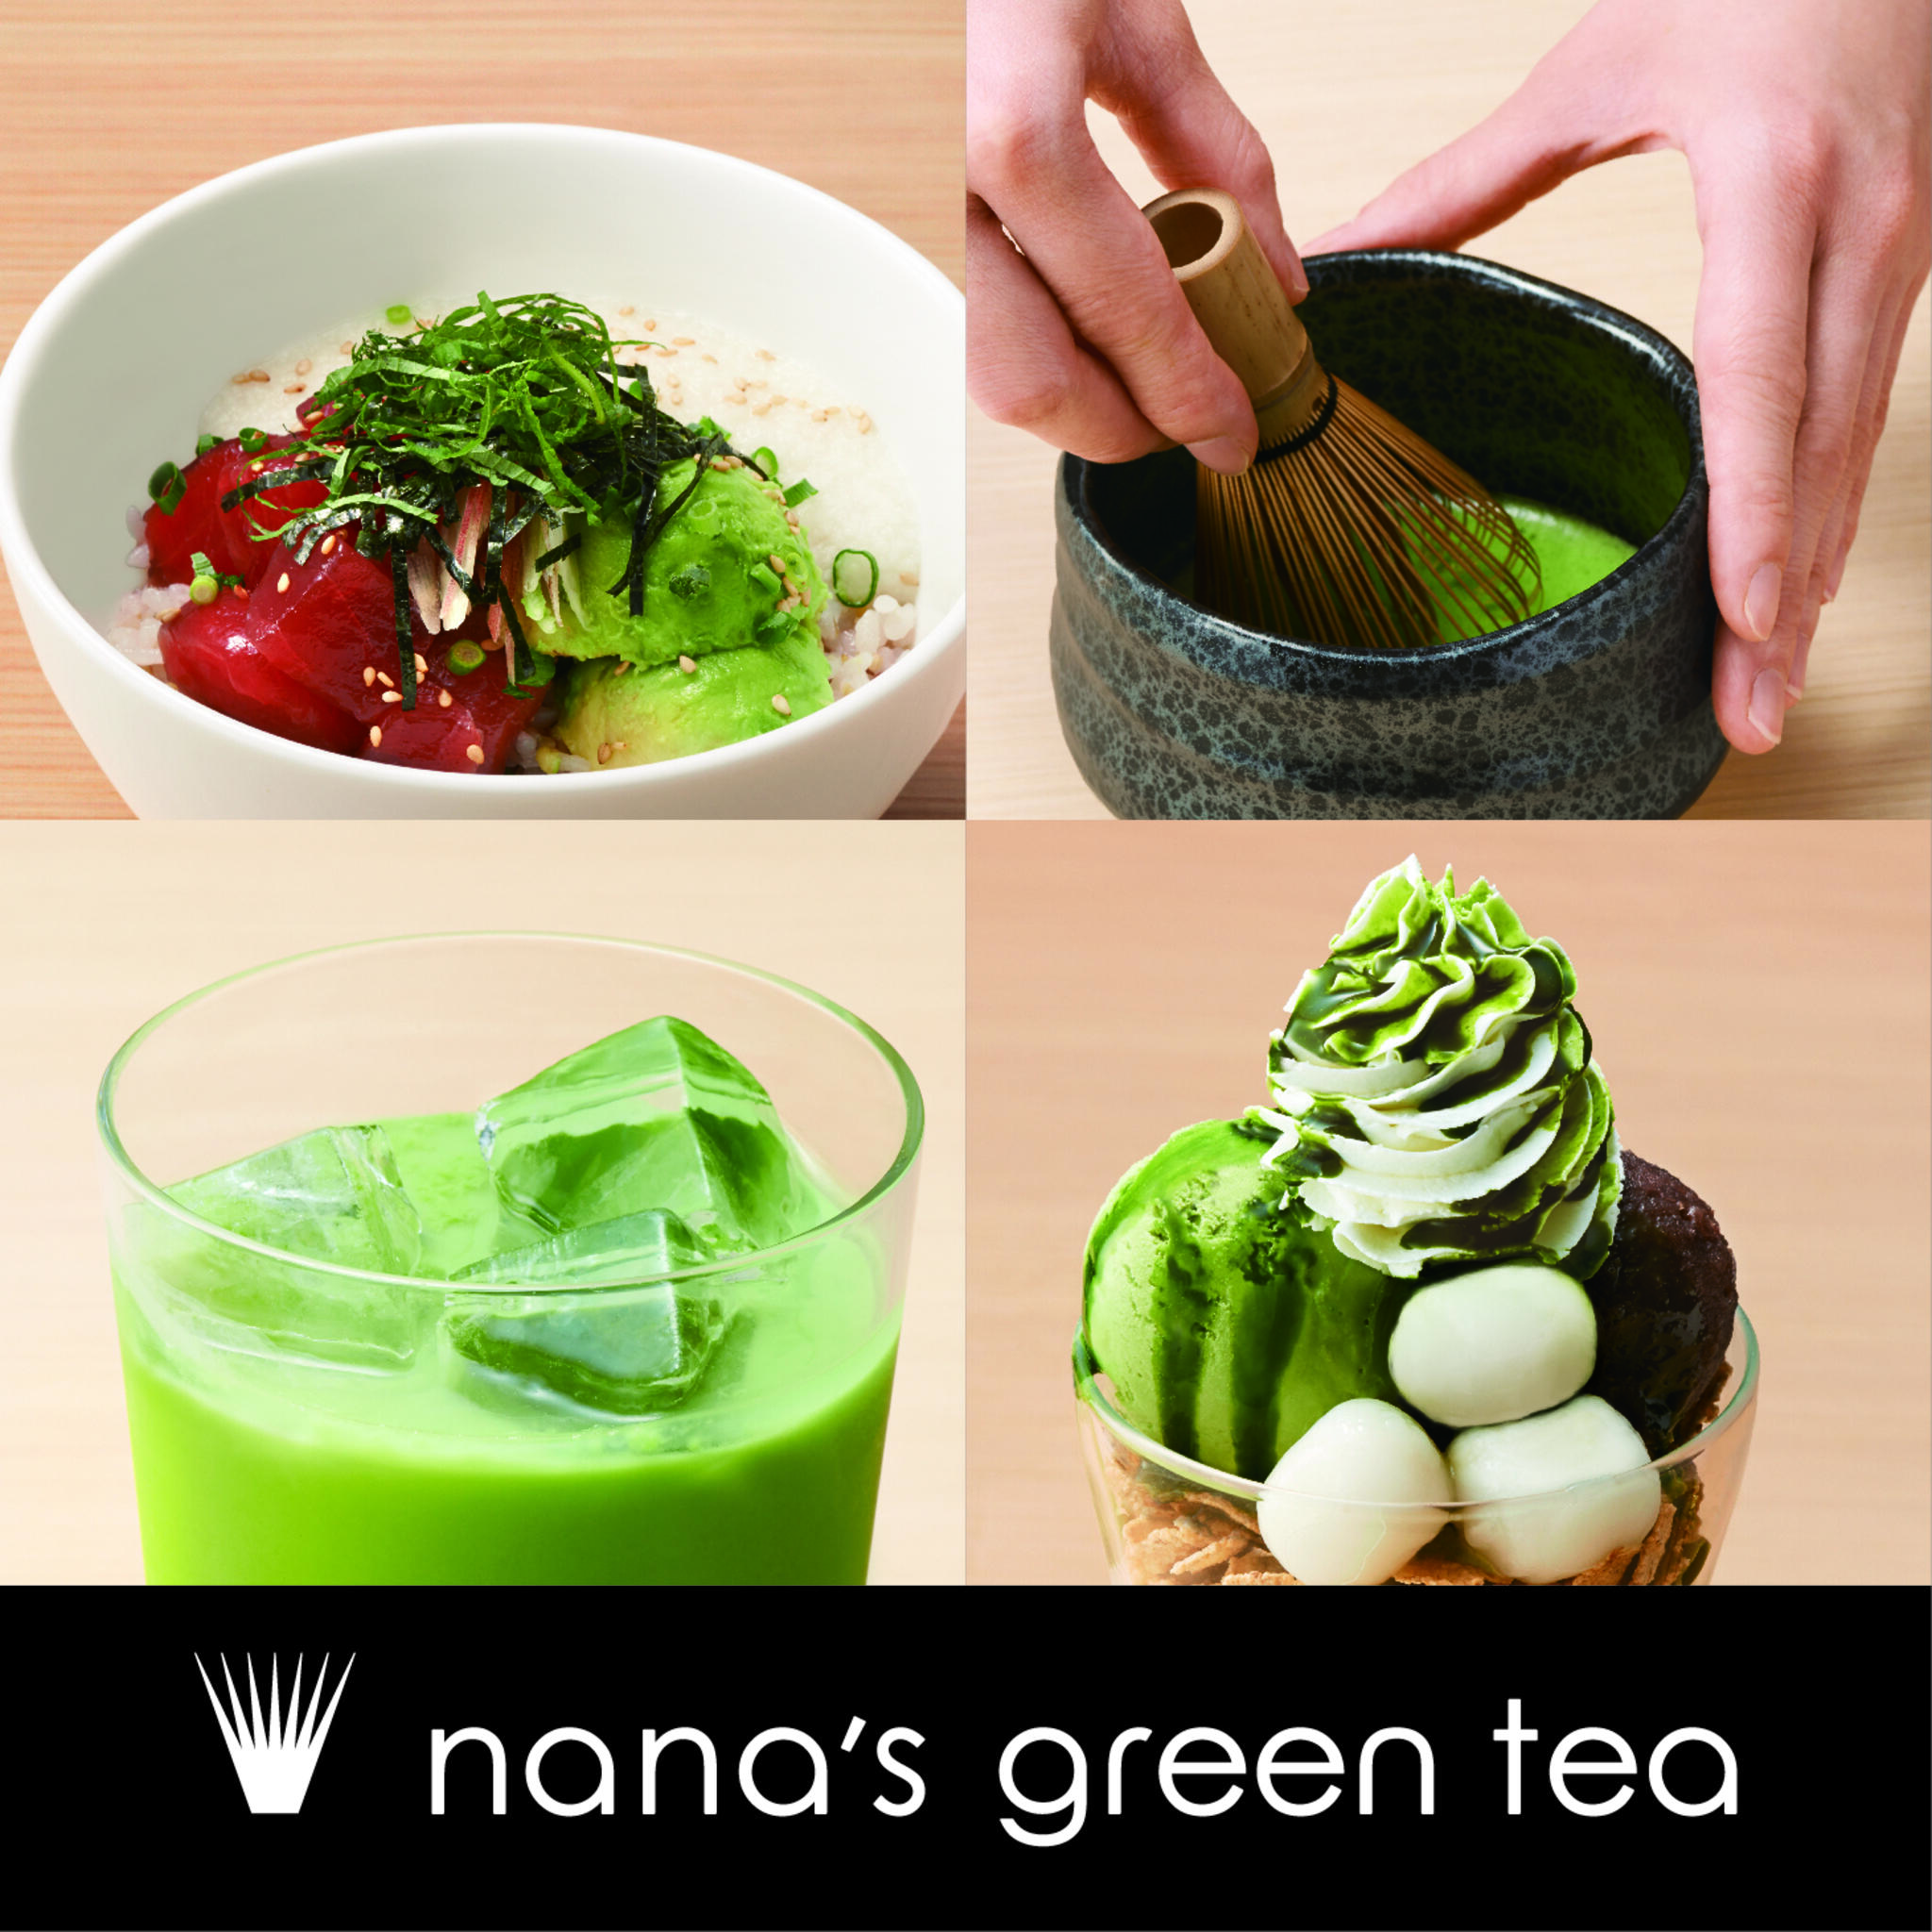 nana's green tea イオンレイクタウン店の代表写真5